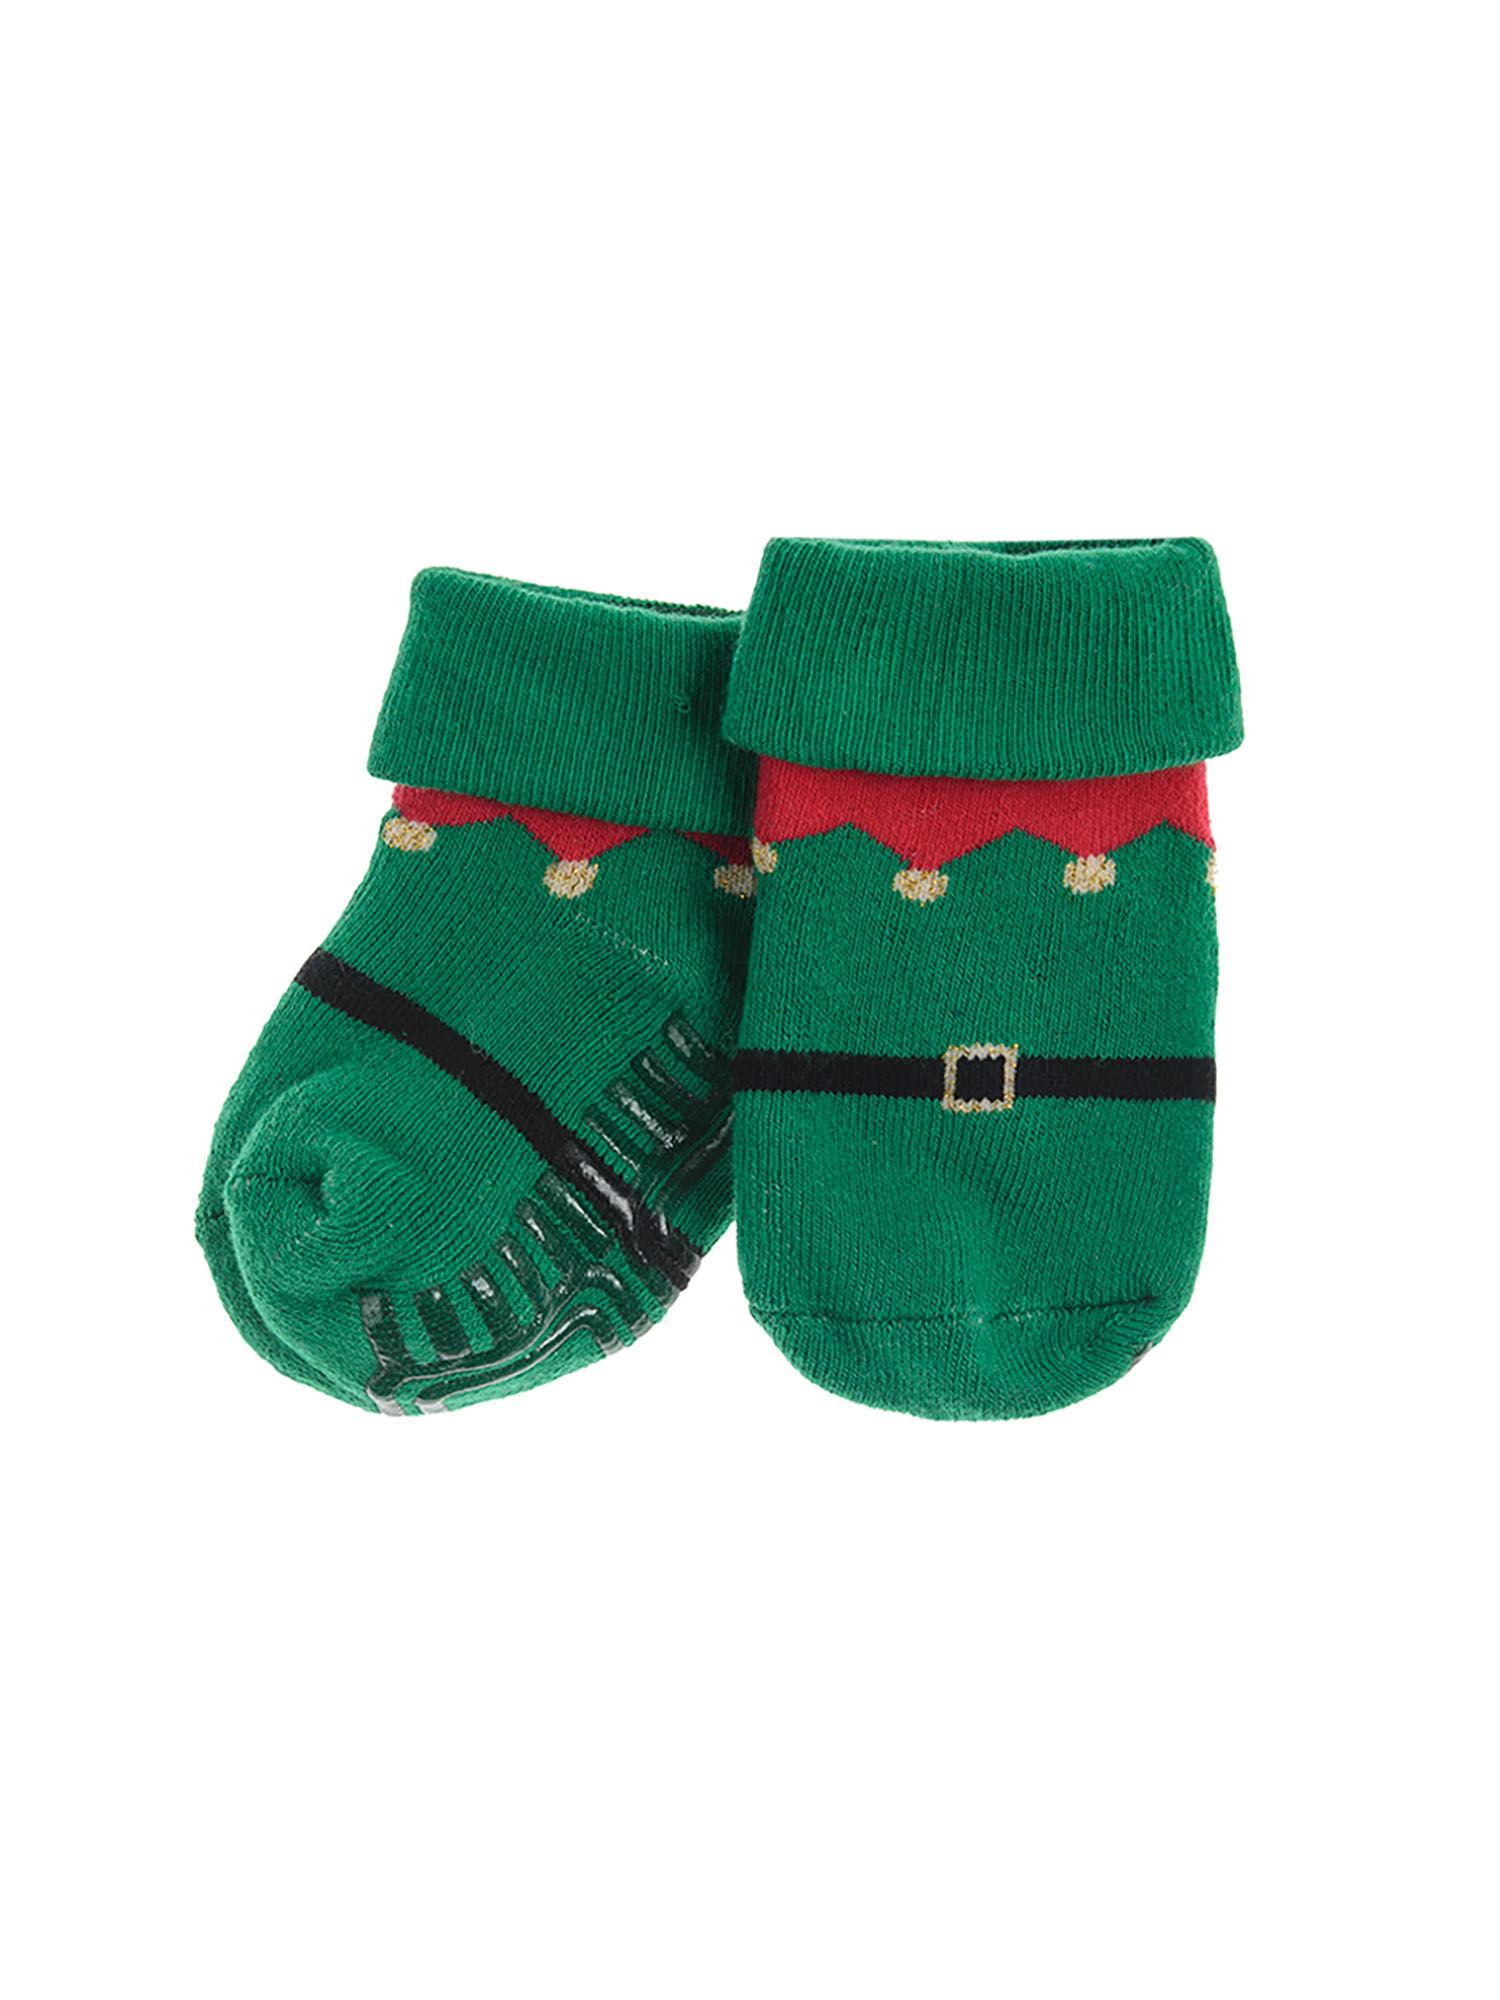 unisex kids green printed socks